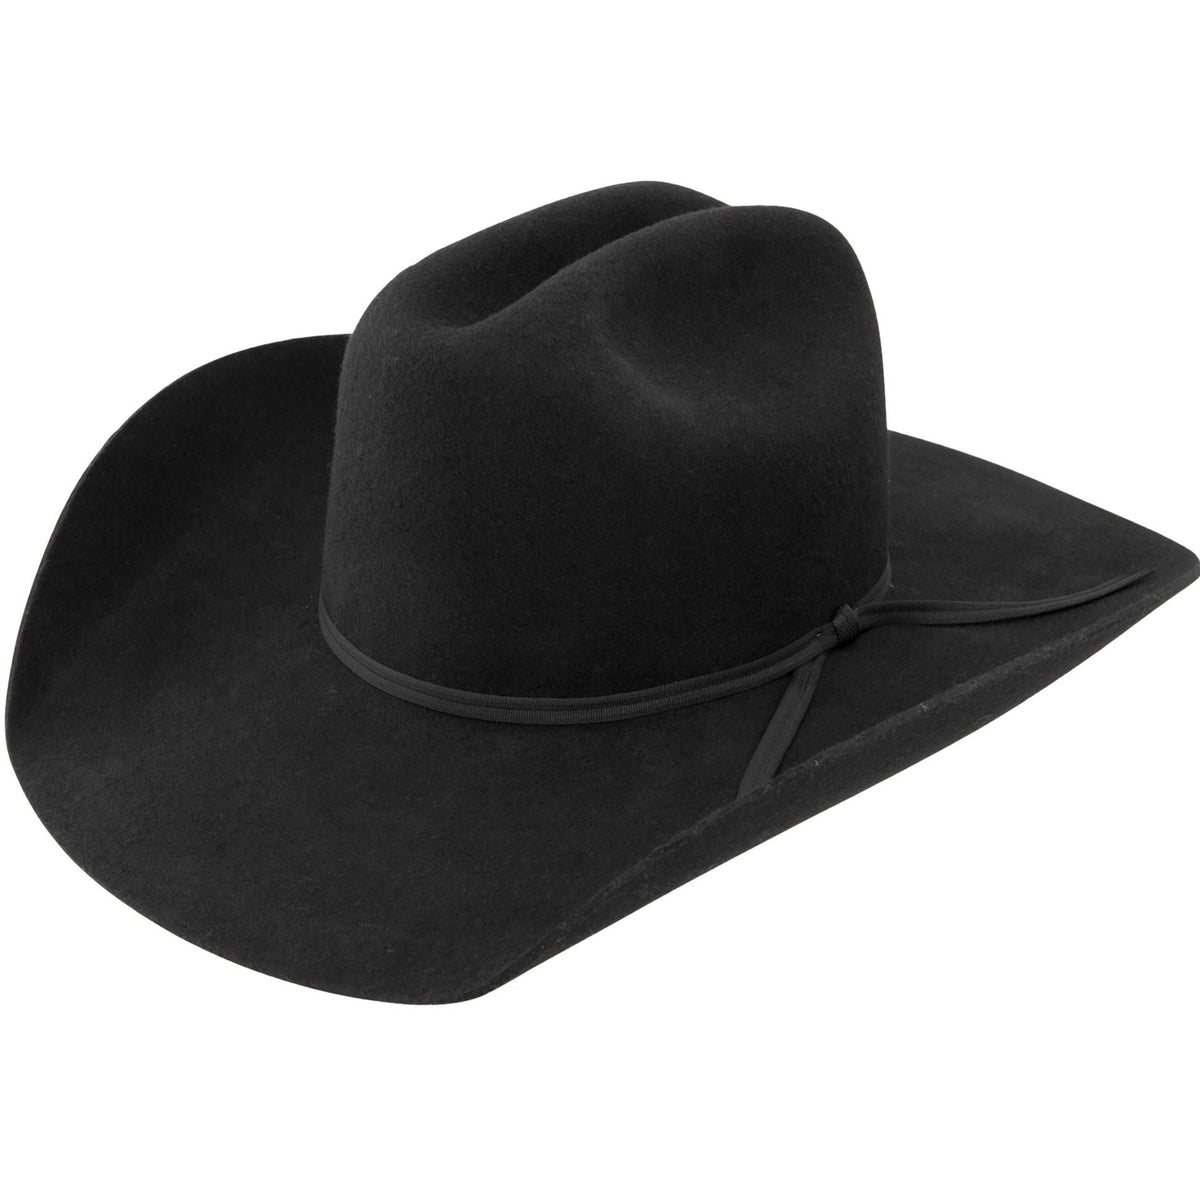 Resistol Youth Crossroads Jr. Black Felt Cowboy Hat